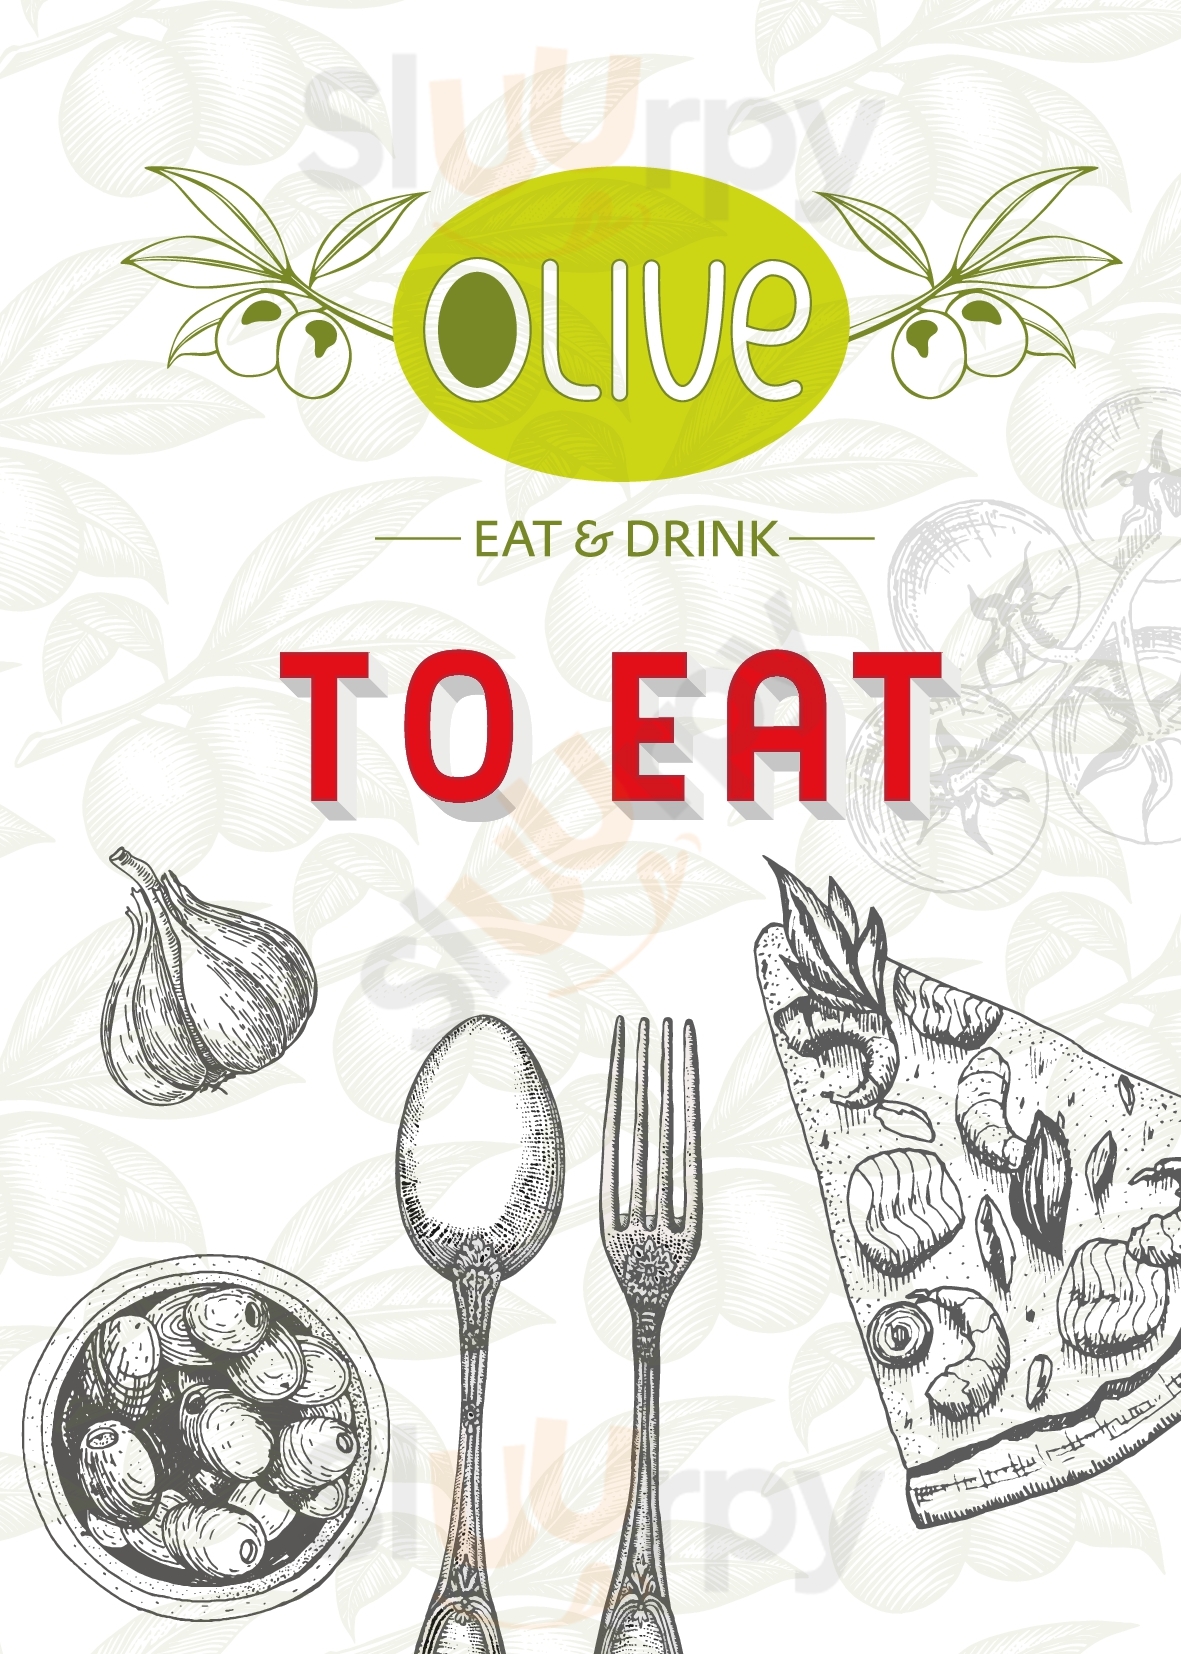 Olive Eat & Drink Wien Menu - 1